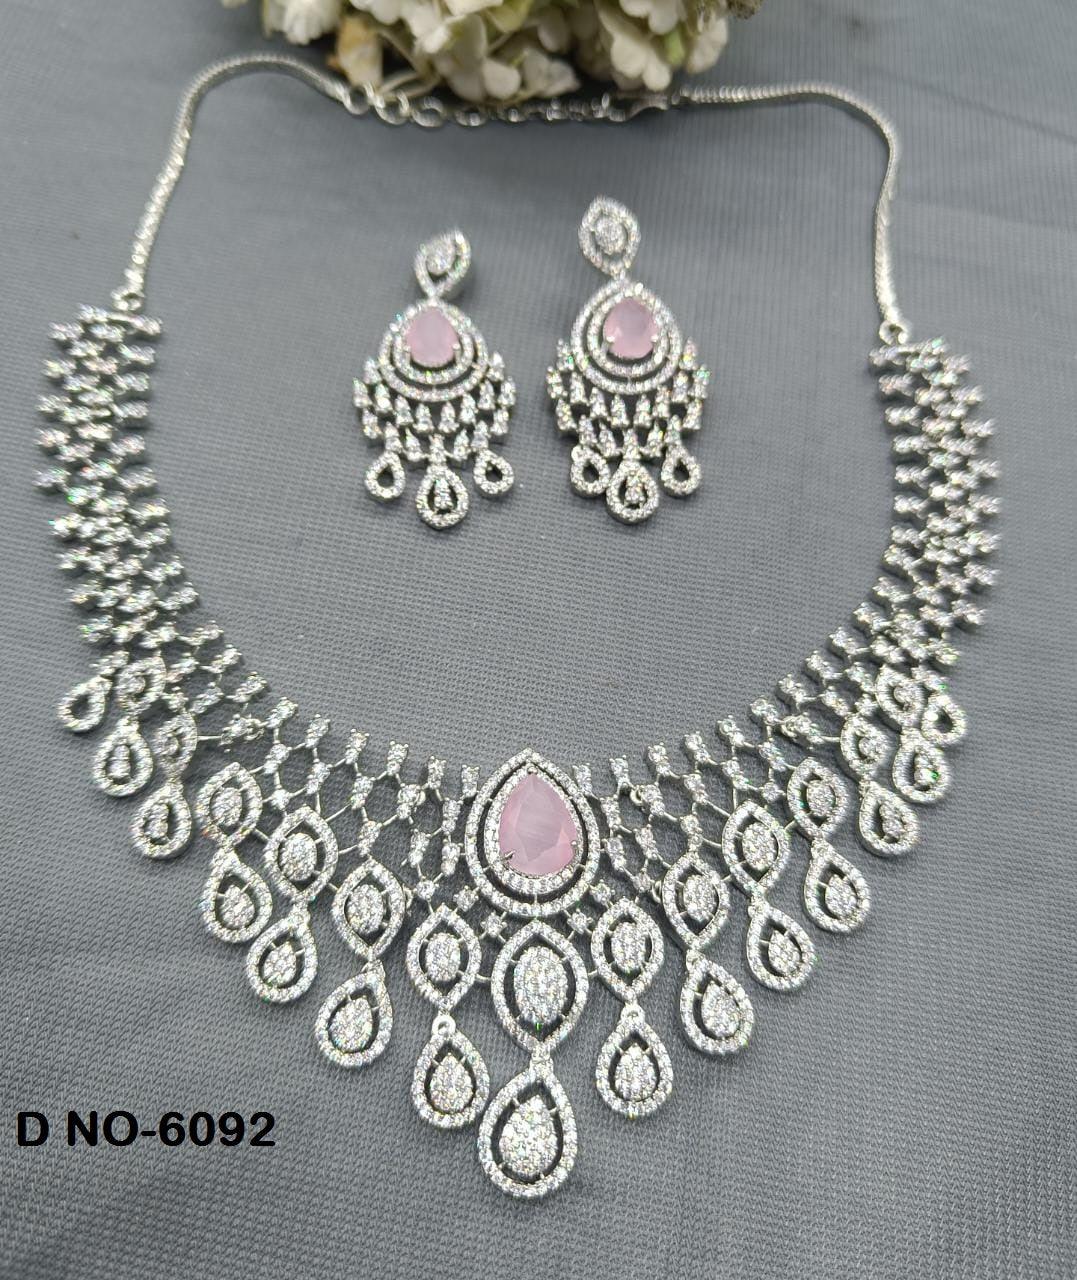 Diamond Necklace Rodium 6092 C3 45 - rchiecreation